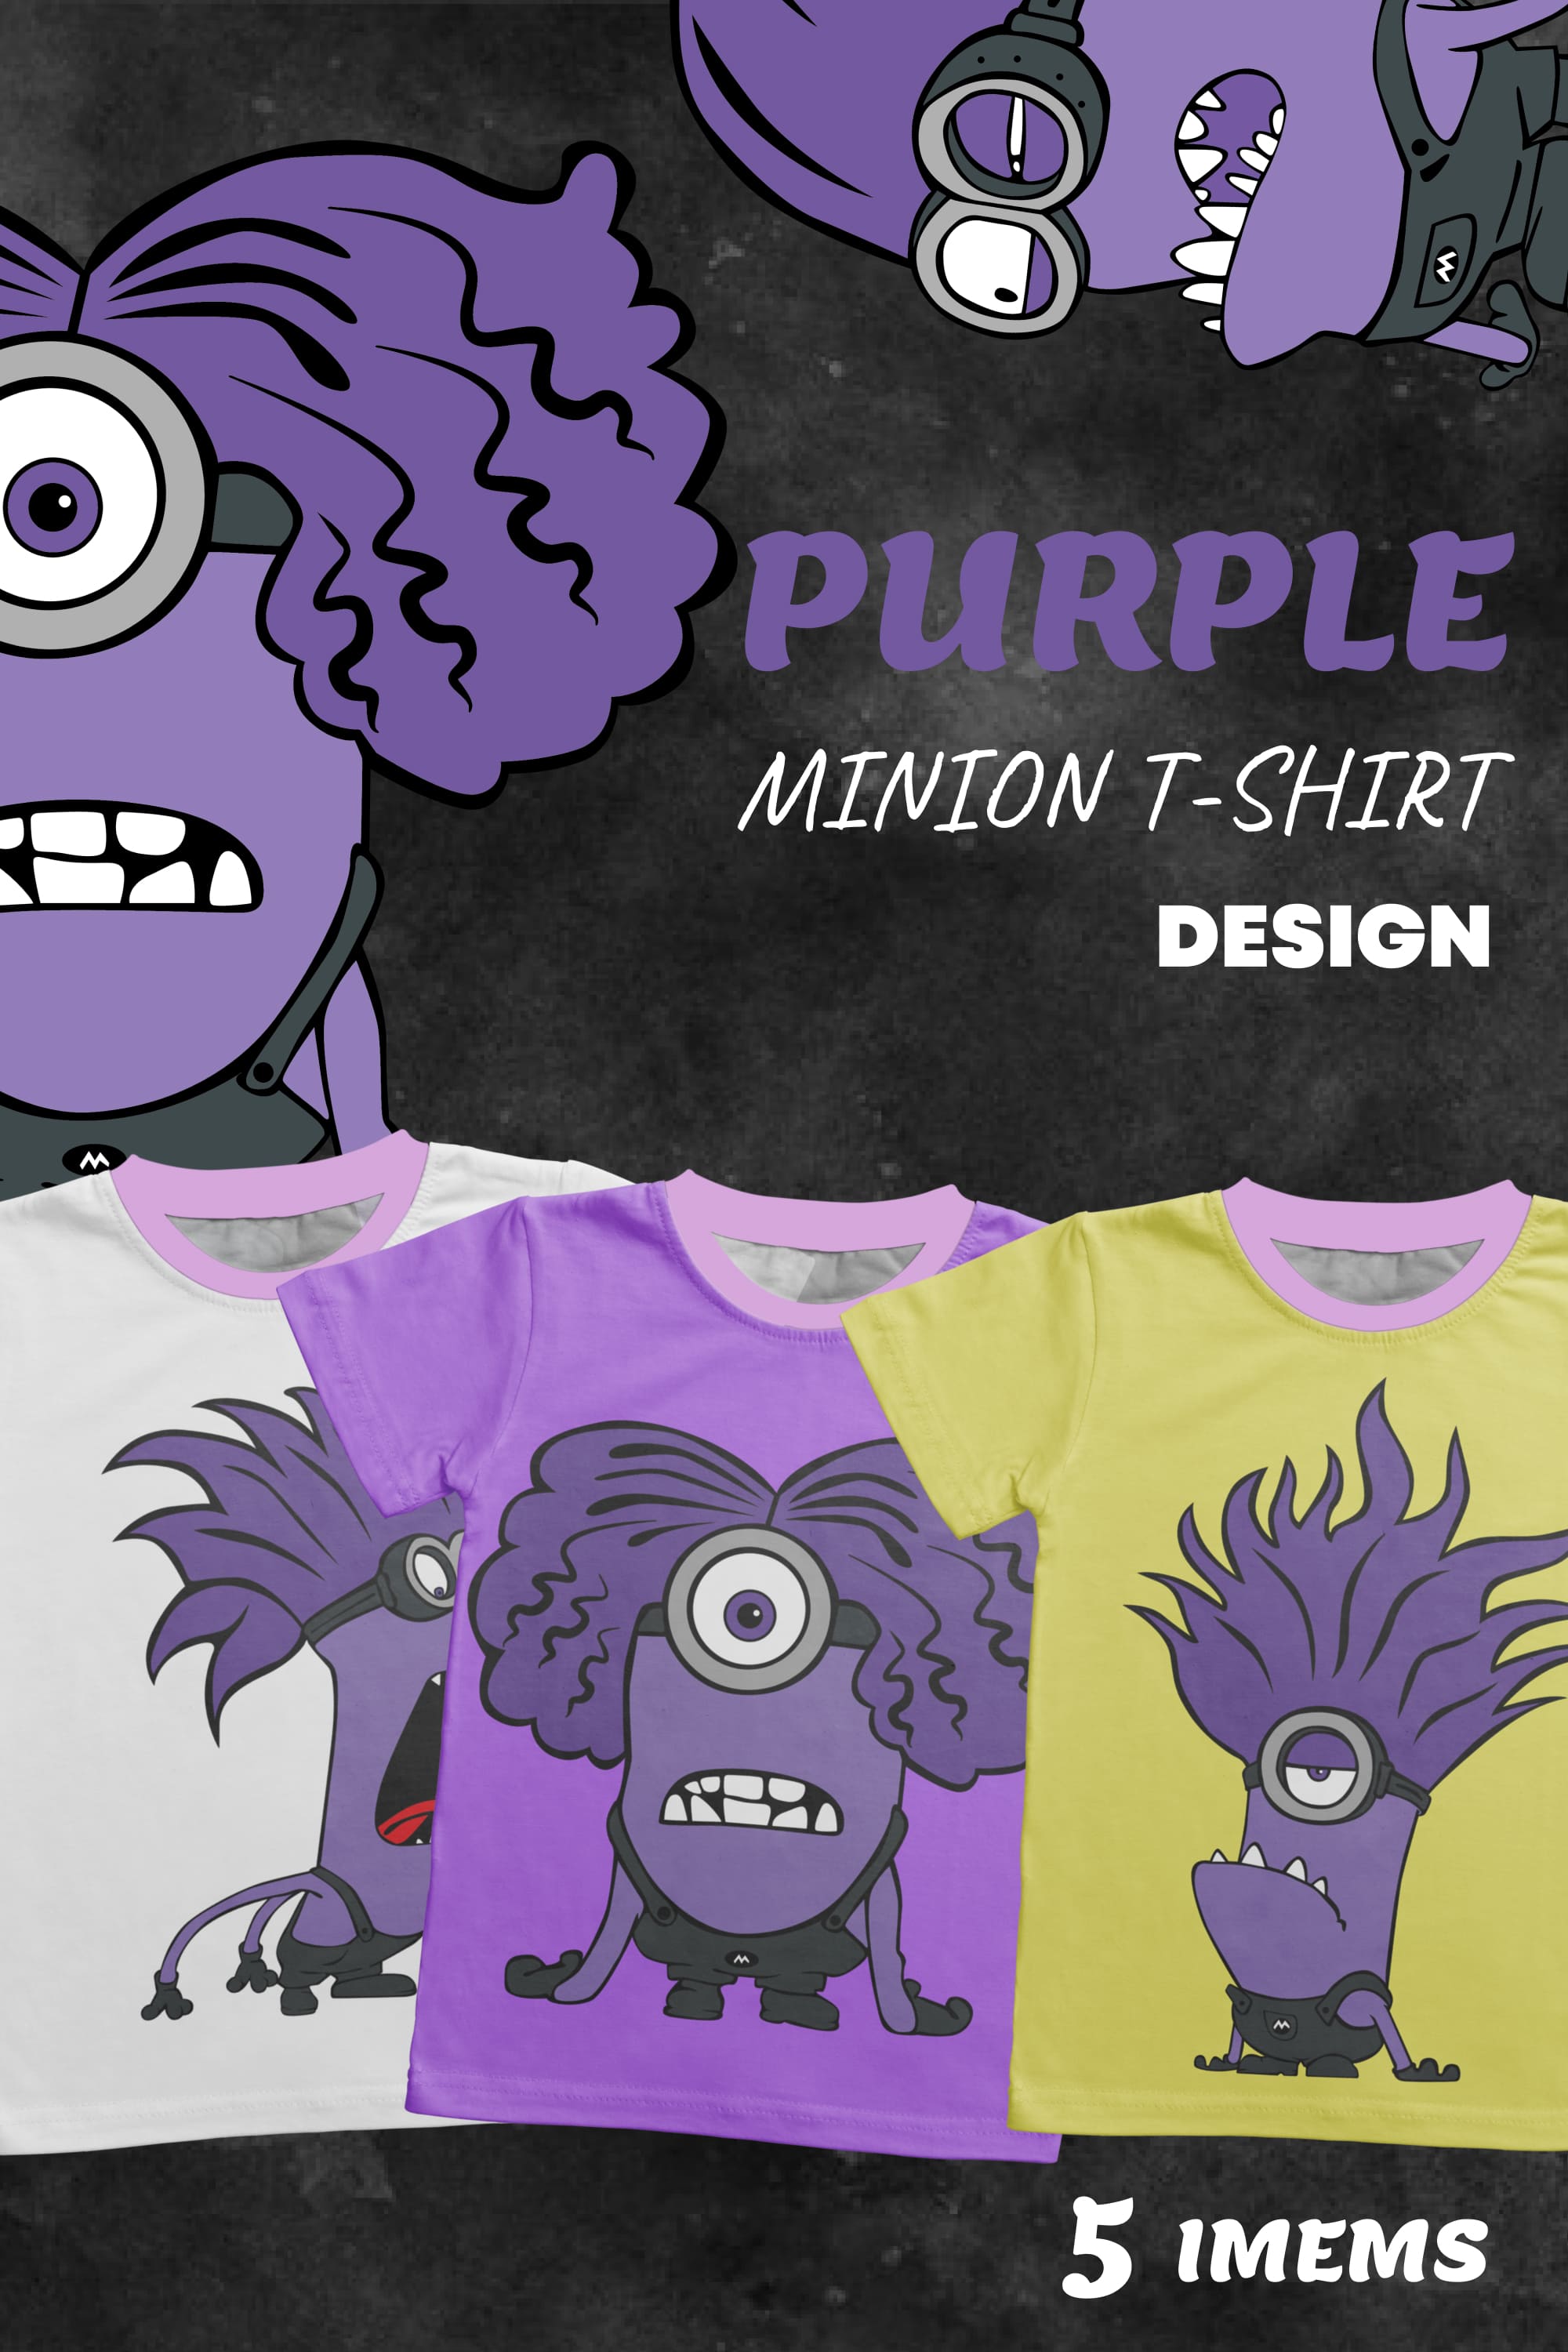 Purple Minion T-shirt Designs - Pinterest.